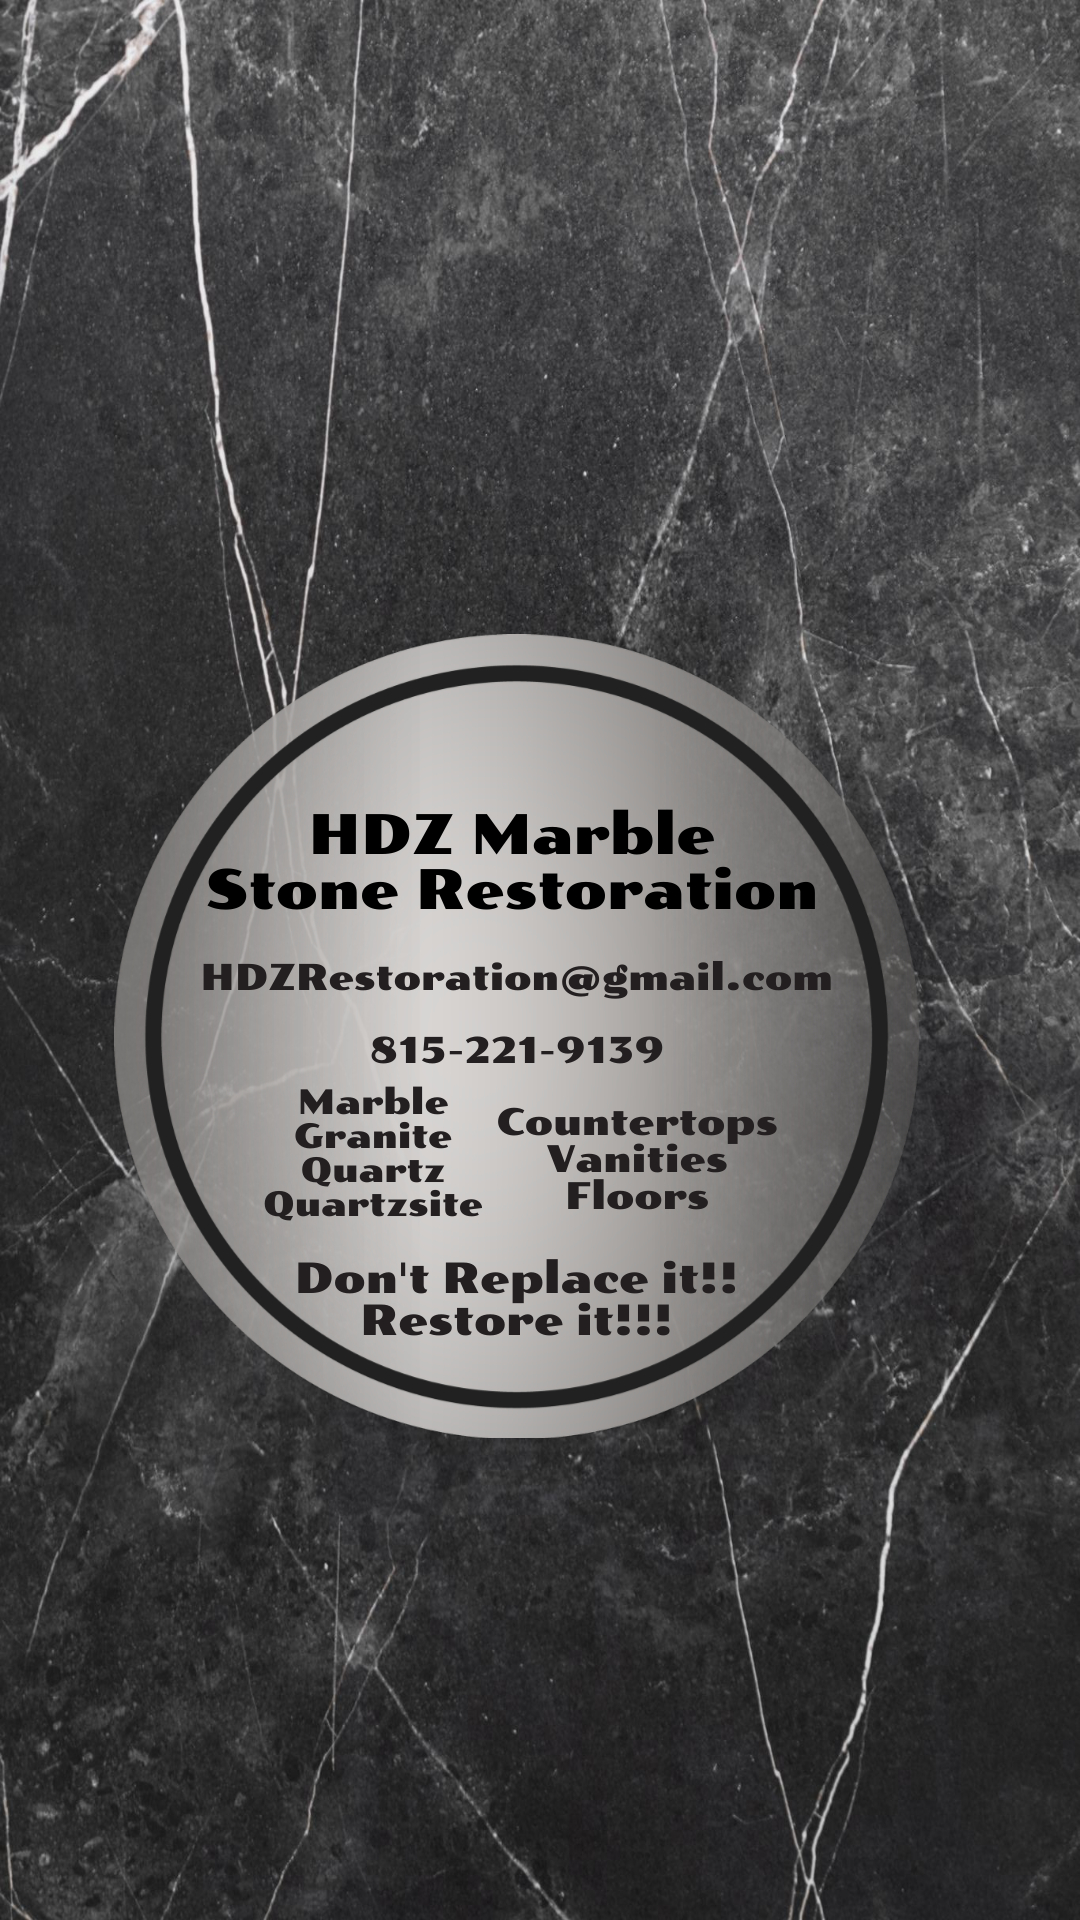 HDZ Marble Stone Restoration Logo